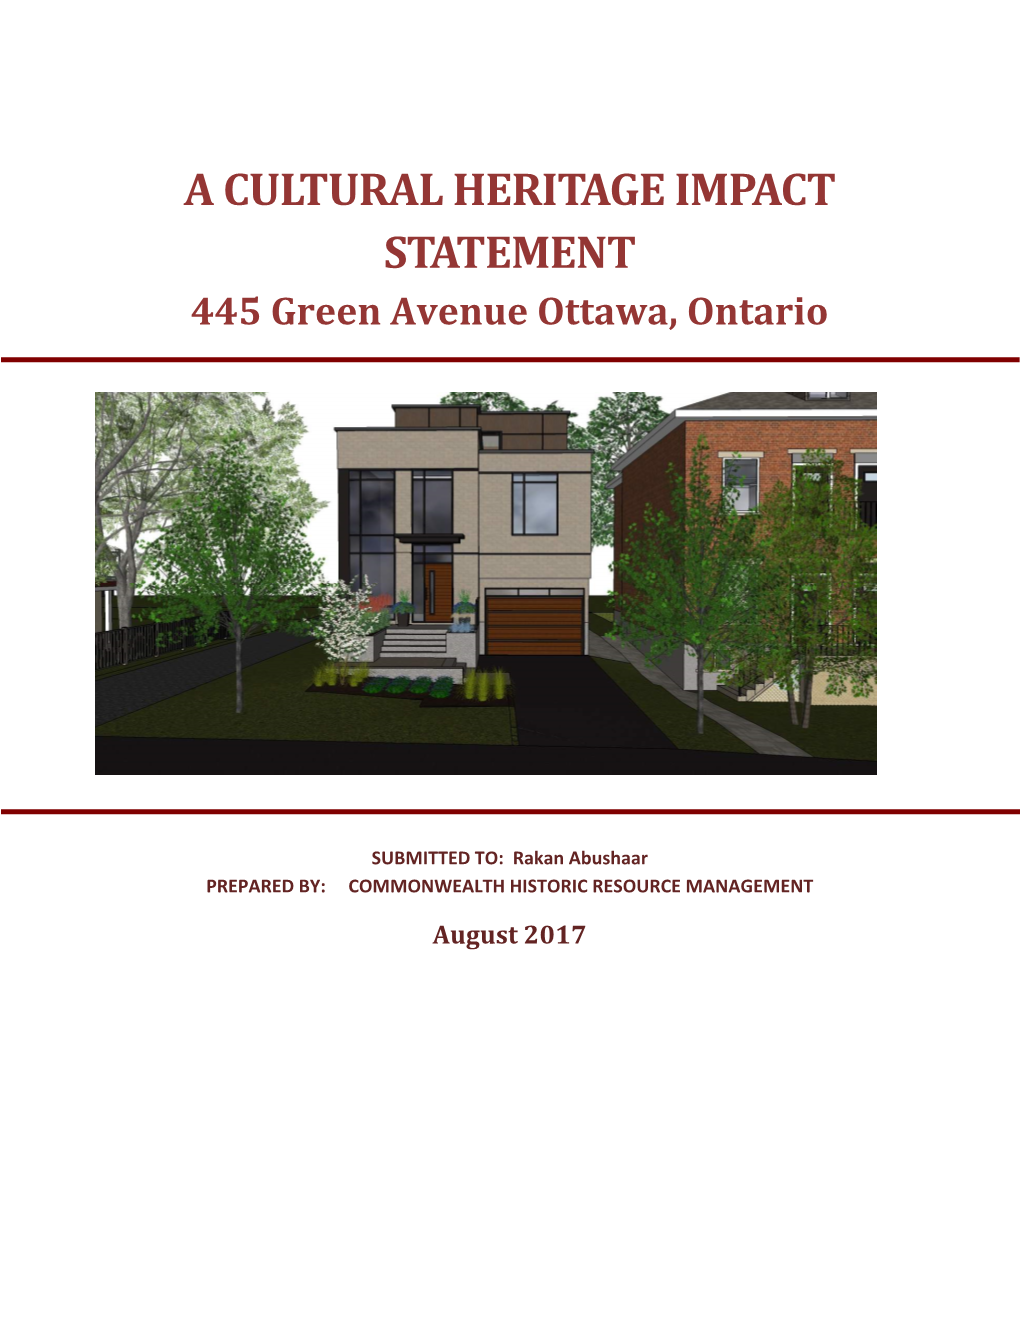 A CULTURAL HERITAGE IMPACT STATEMENT 445 Green Avenue Ottawa, Ontario